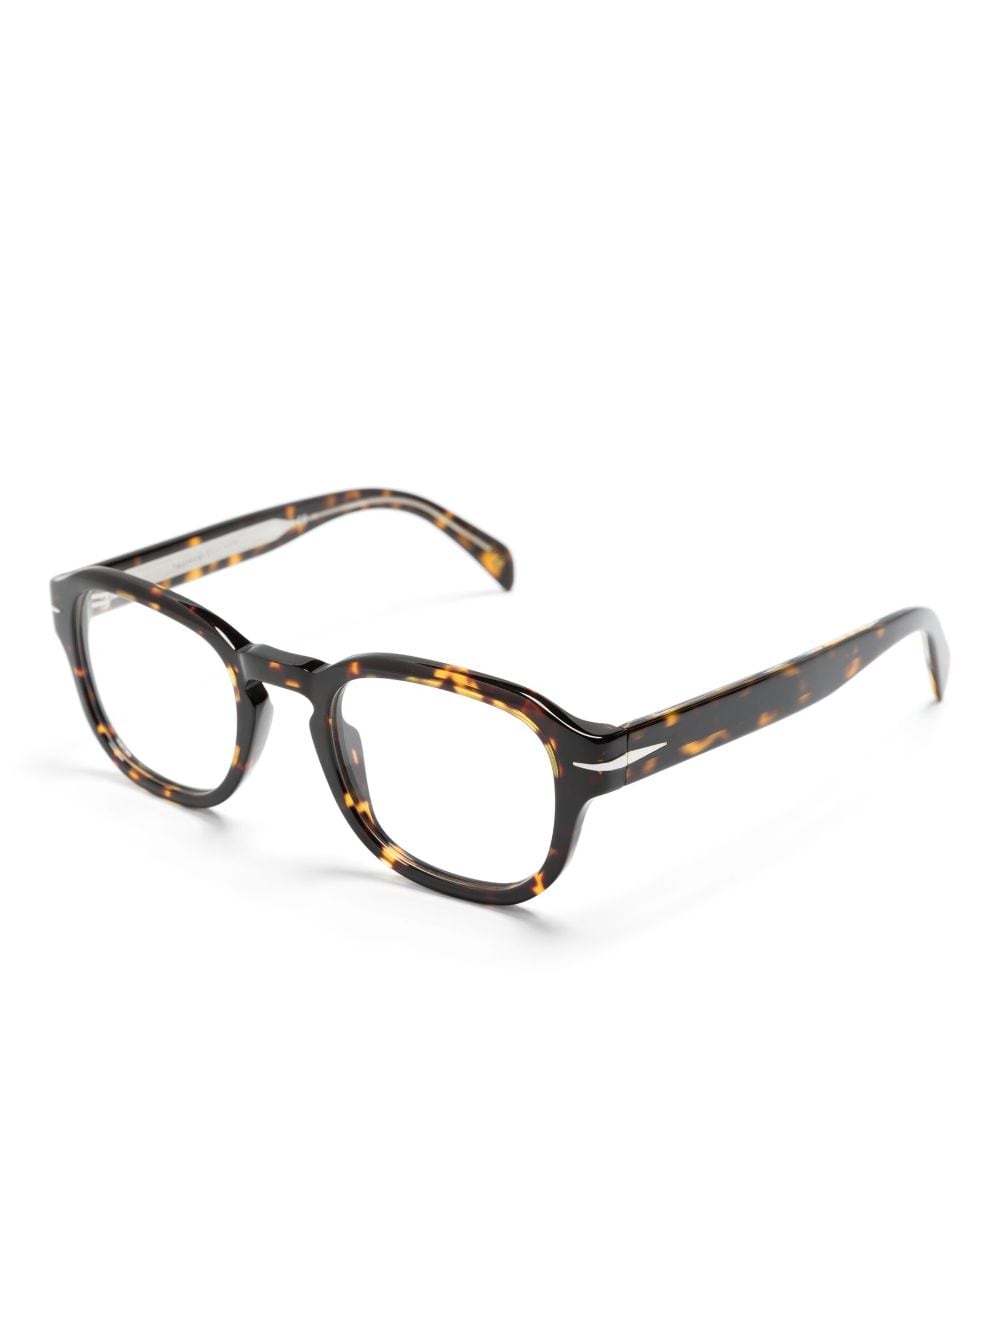 Image 2 of Eyewear by David Beckham tortoiseshell round-frame glasses